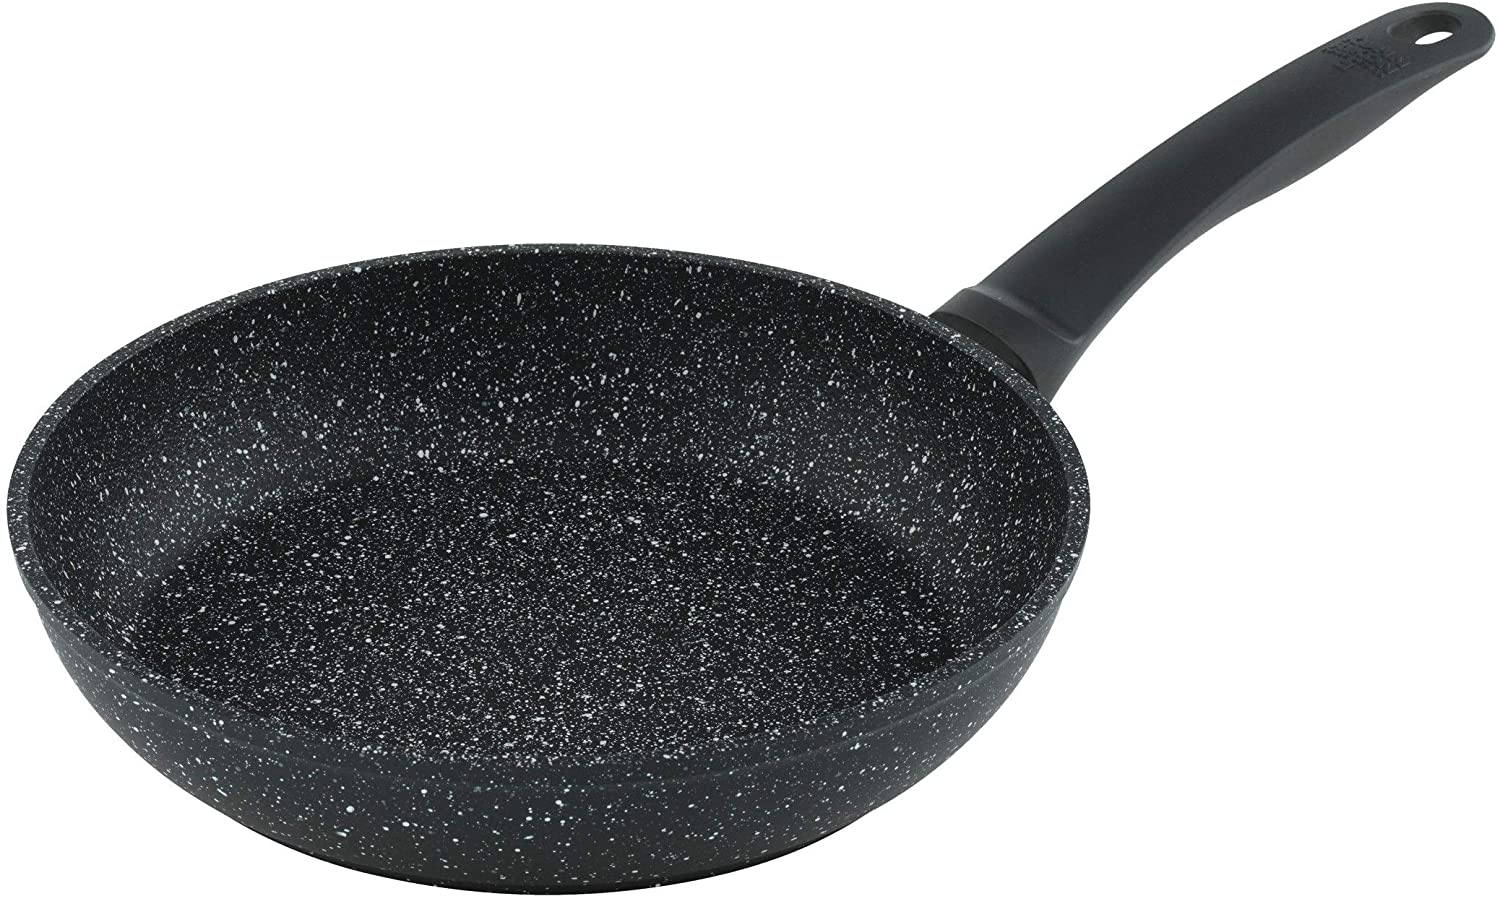 Kuhn Rikon Easy Induction Marble Frying Pan Frying Pan Induction Pan Diameter 22 cm 31556